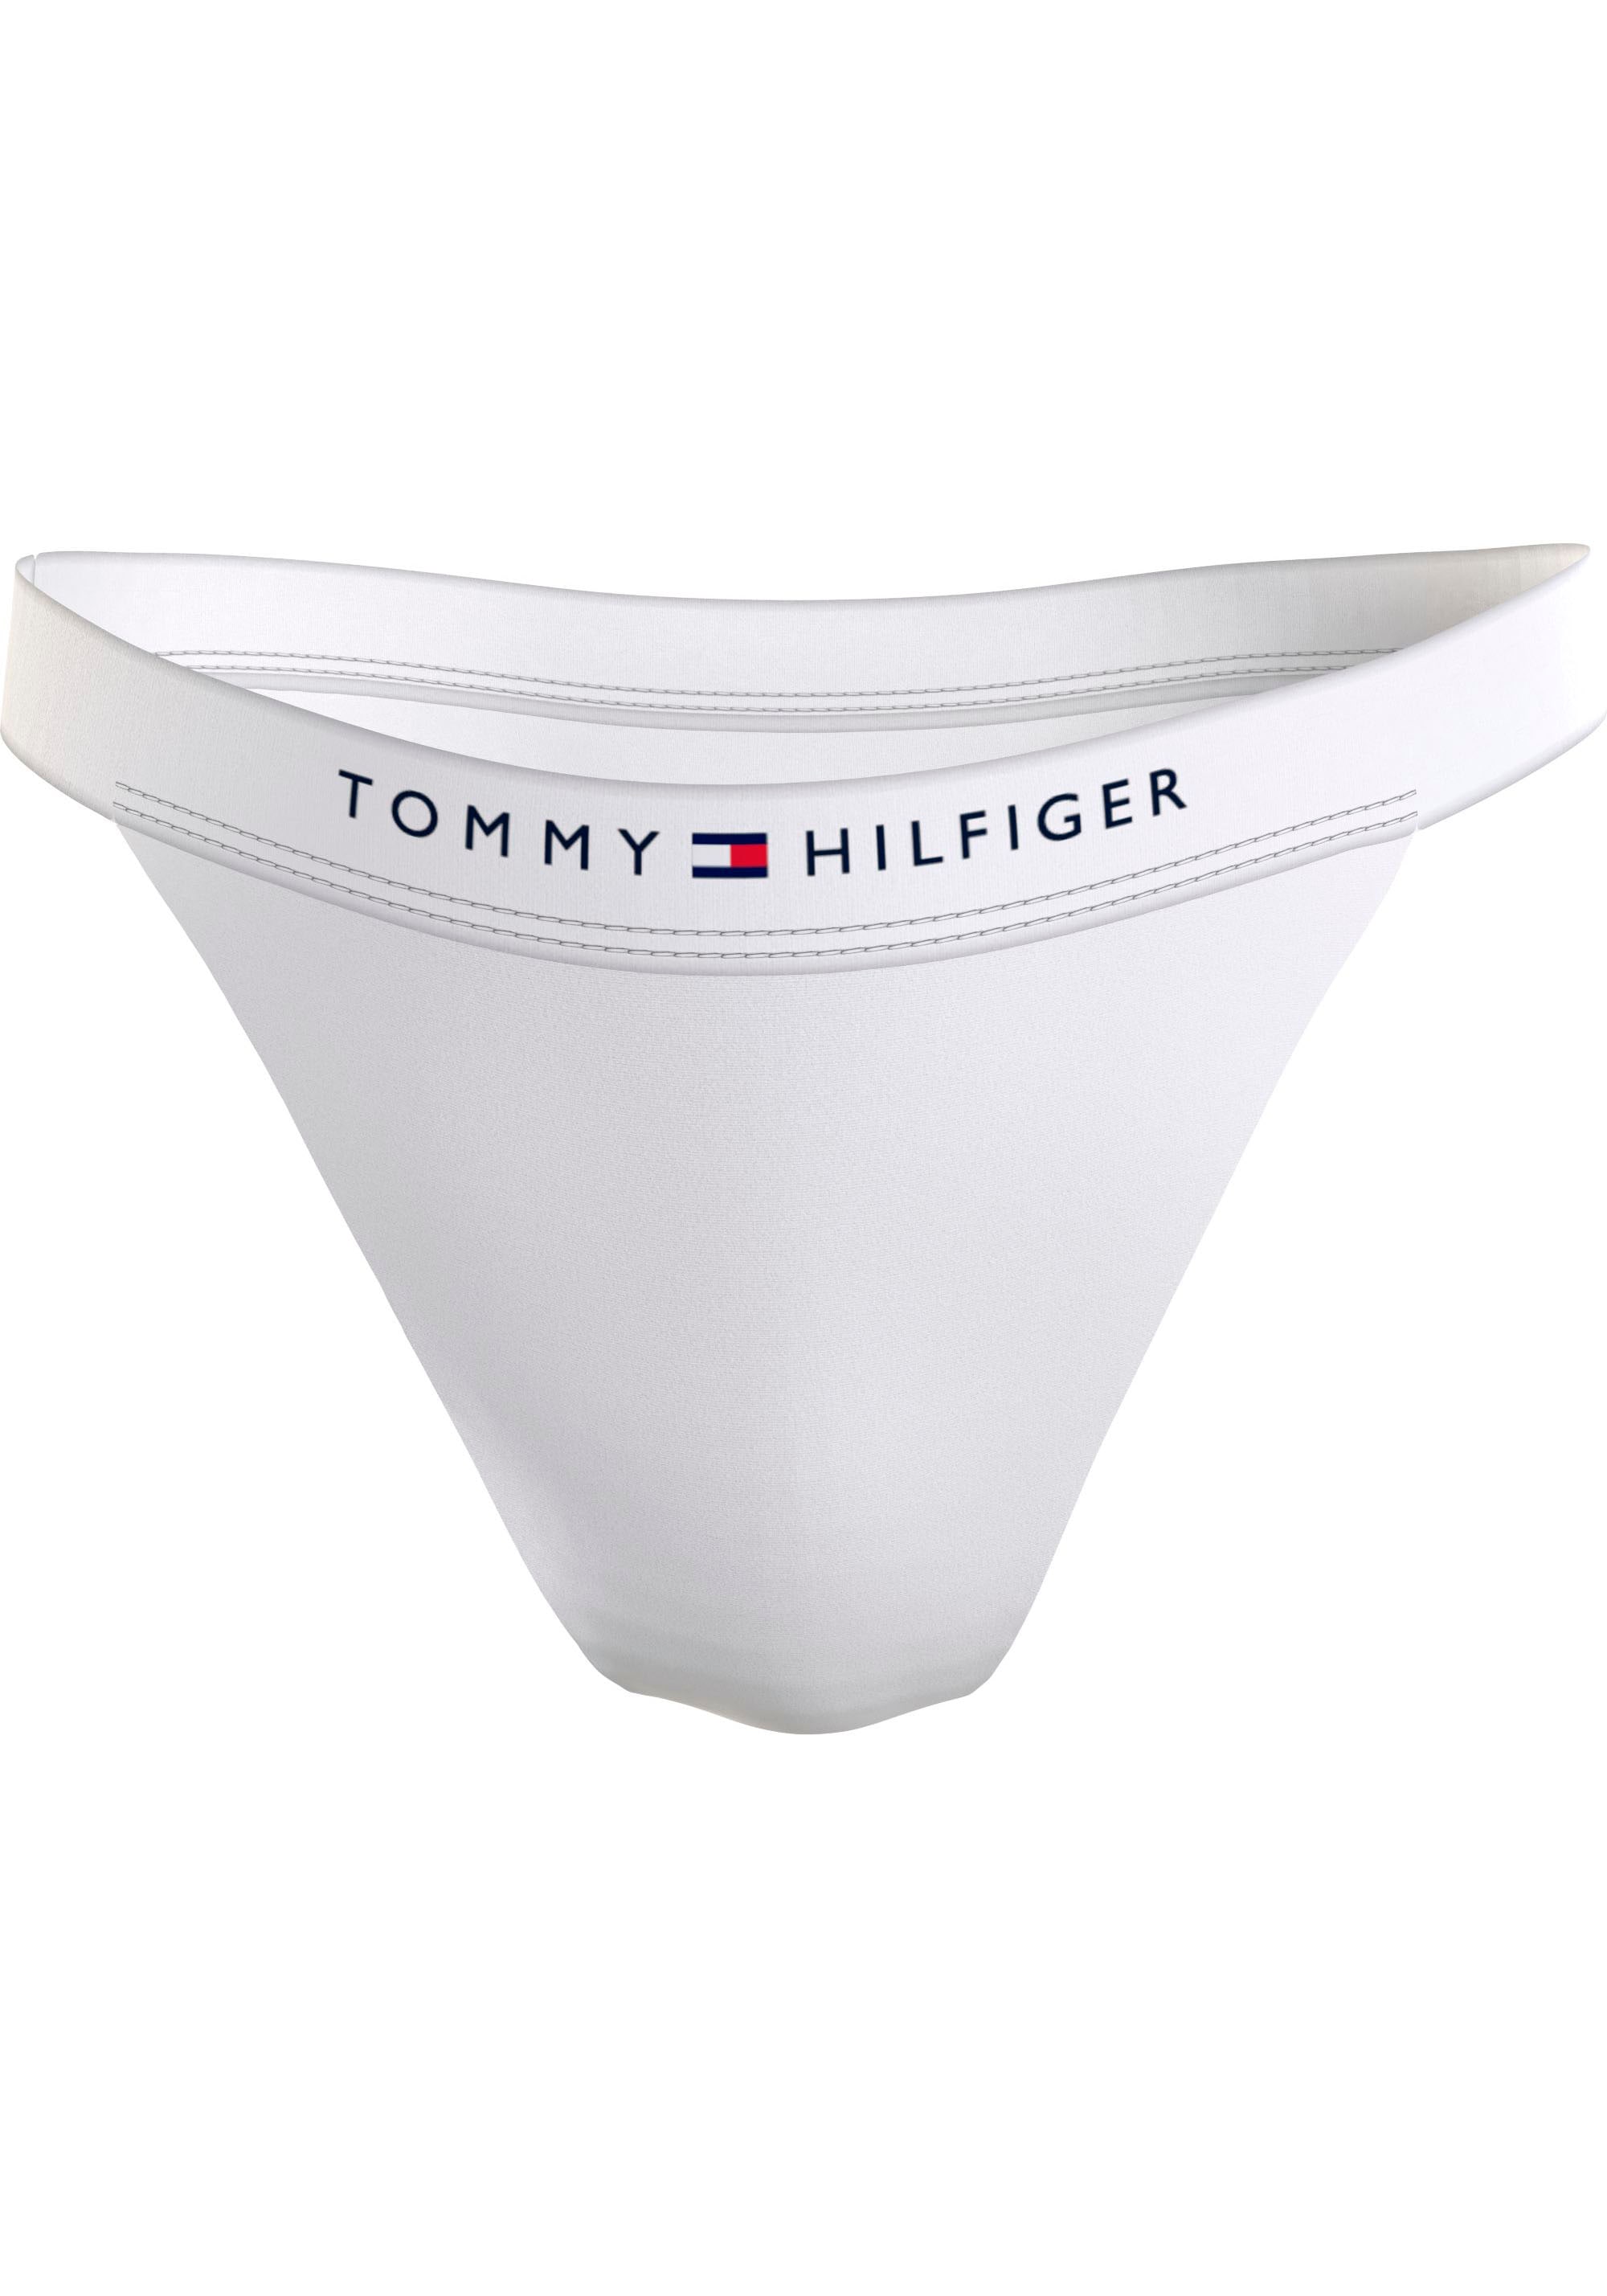 Bikini-Hose »TH WB CHEEKY BIKINI«, mit Tommy Hilfiger-Branding